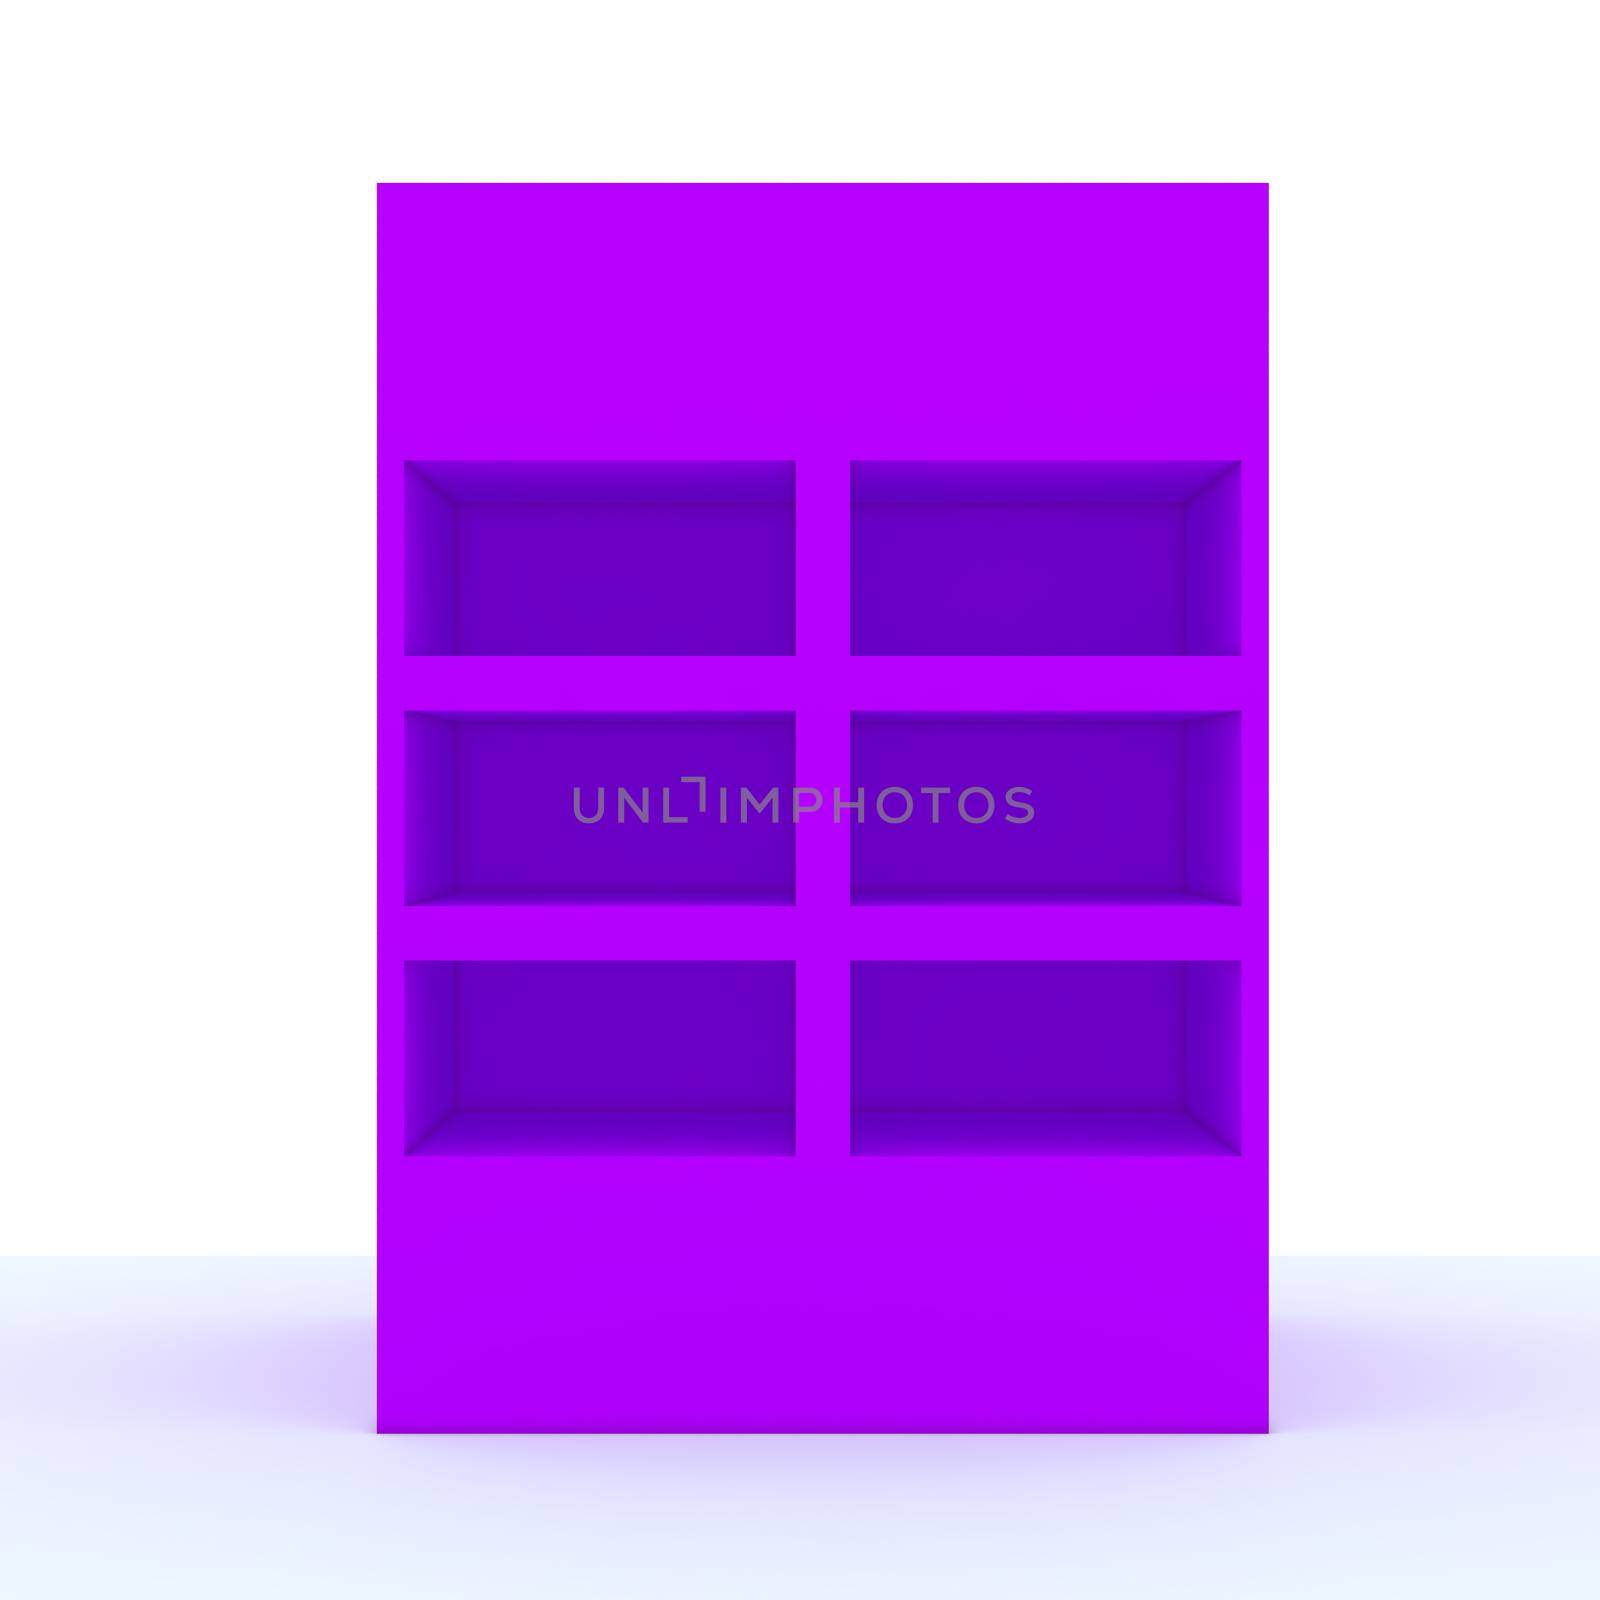 Color purple shelf design with white wall